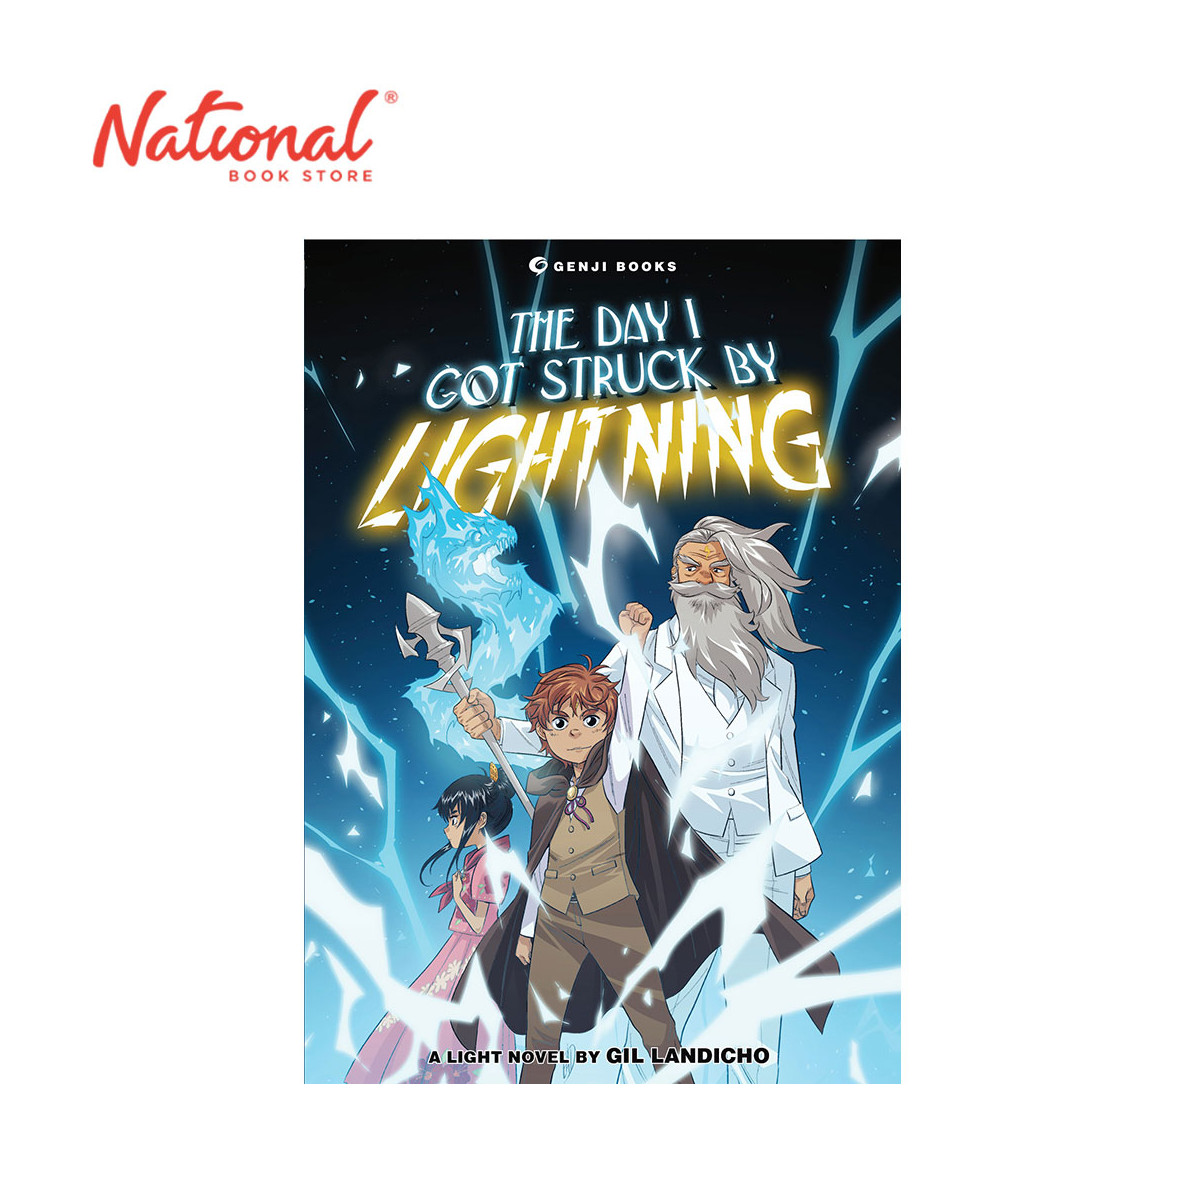 Genji Novel I: The Day I Got Struck By Lightning by Gil Landicho - Trade Paperback